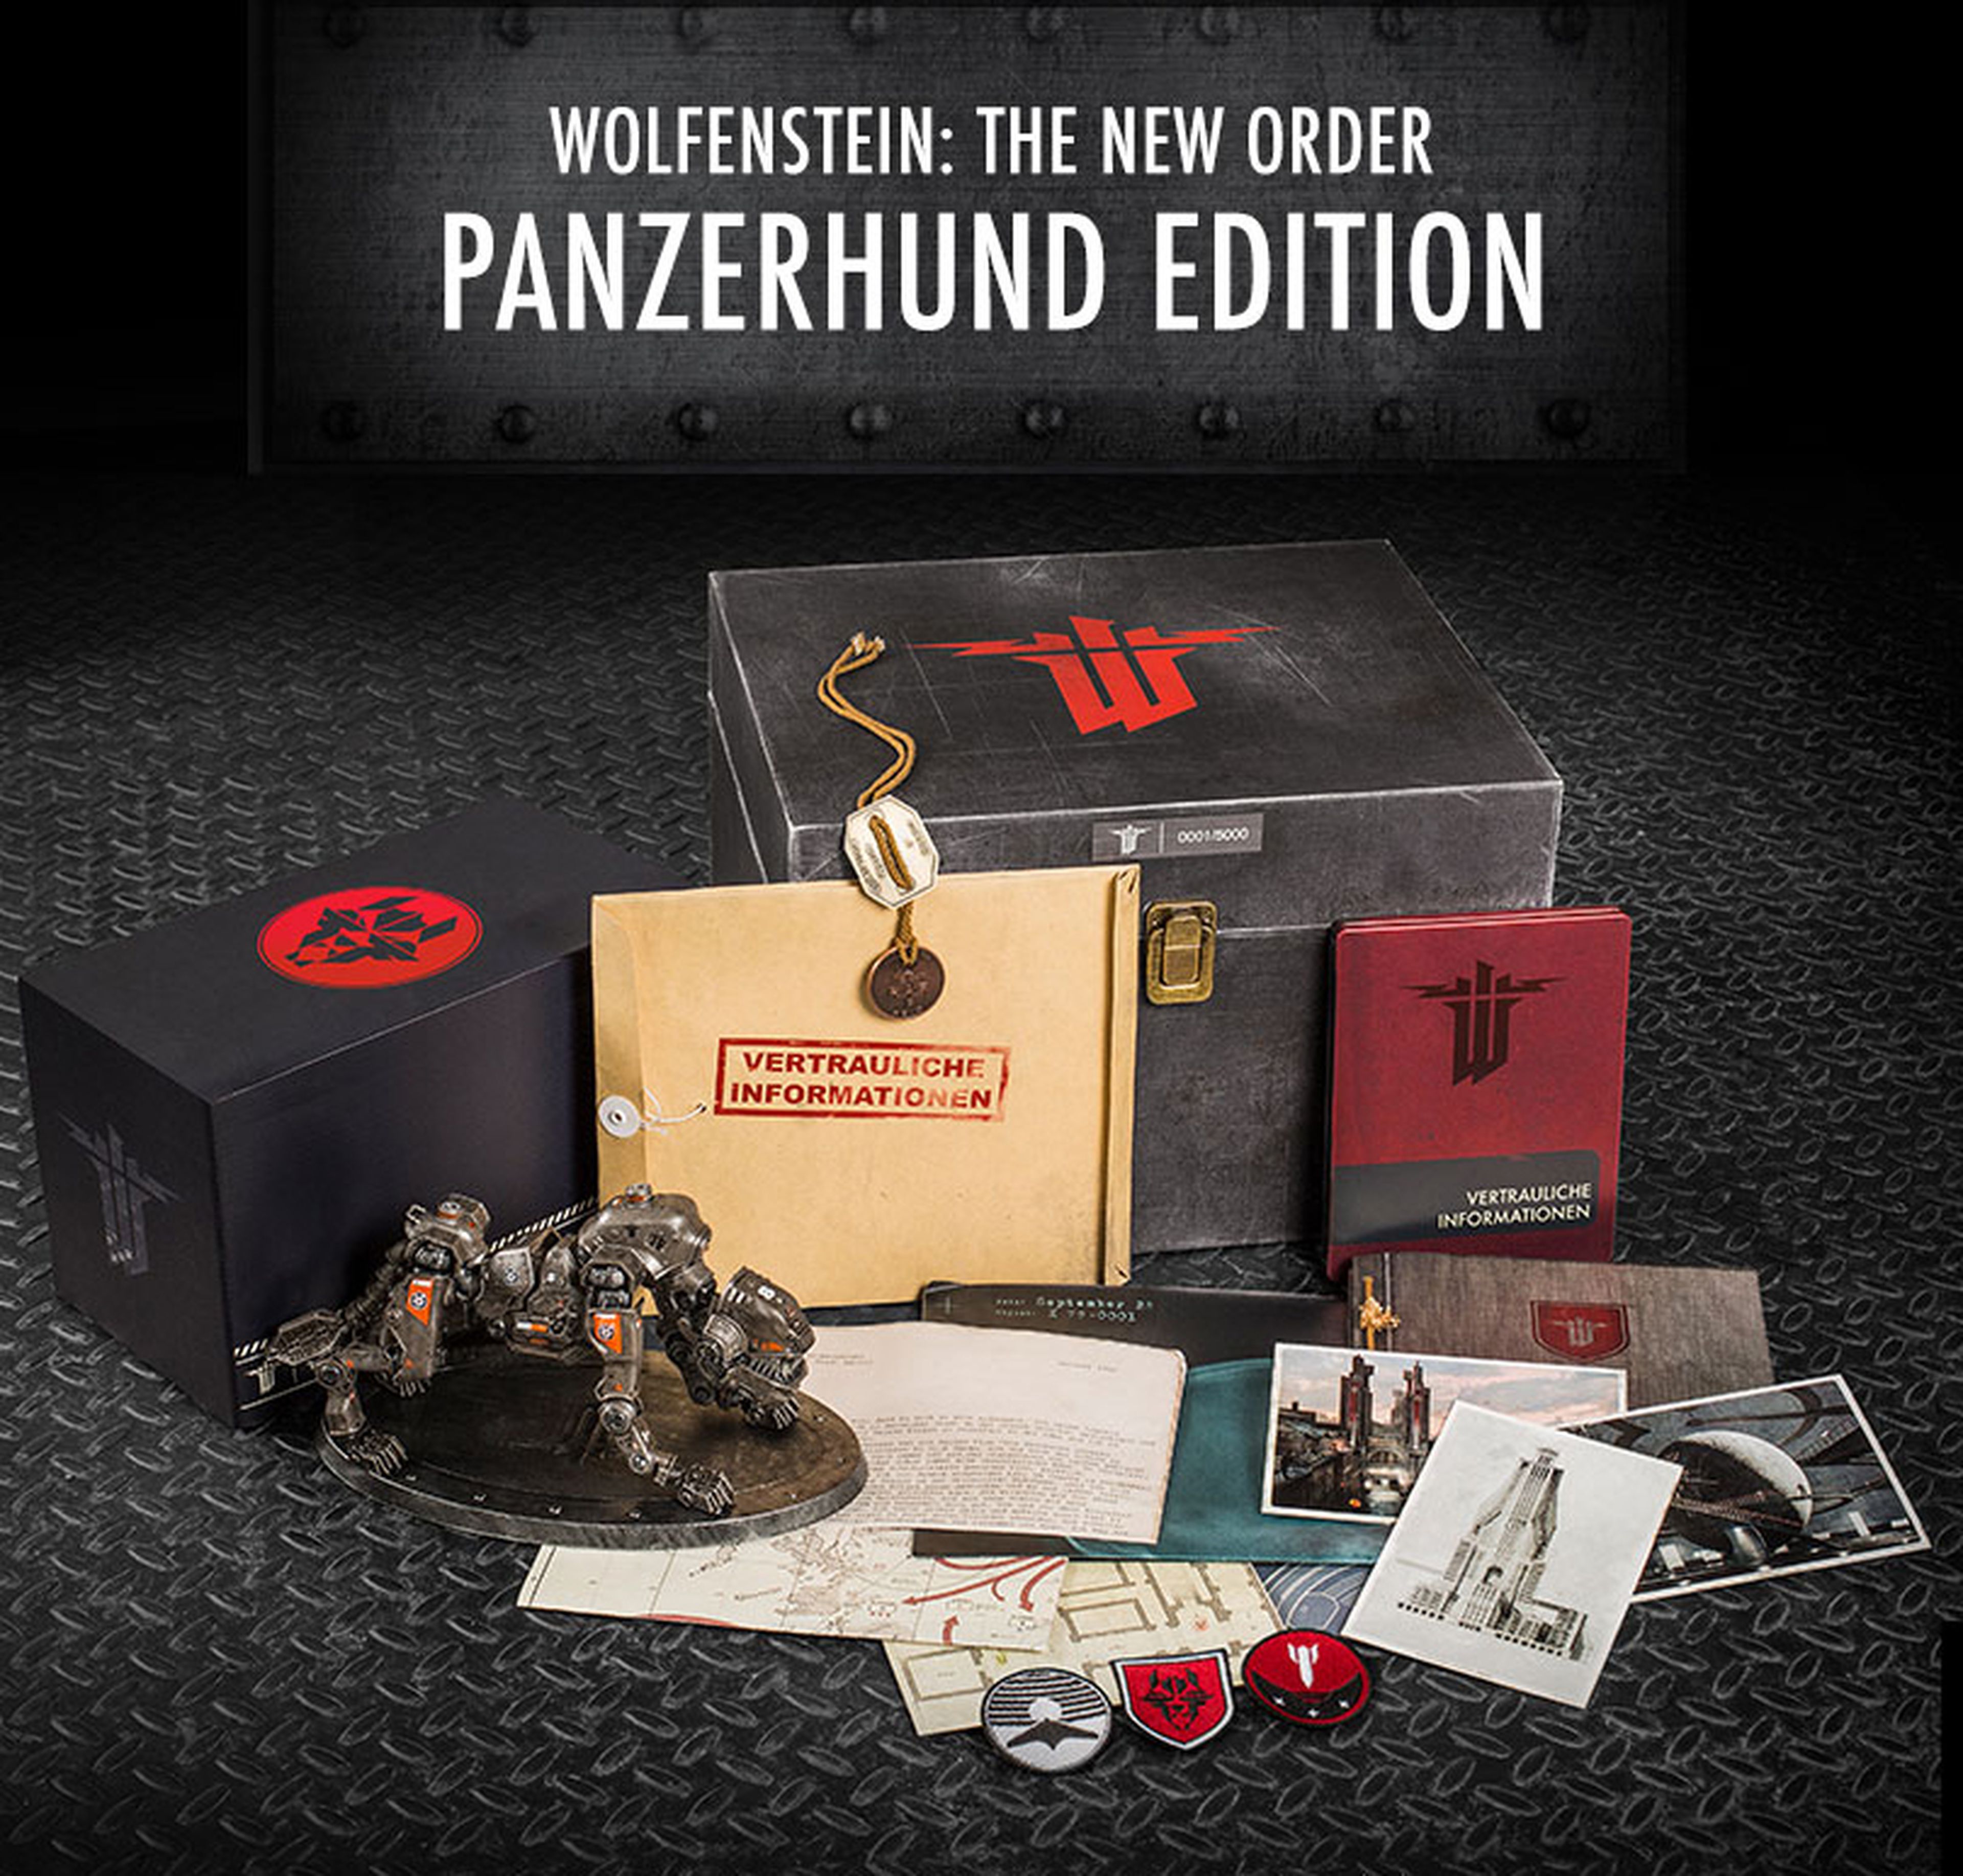 Anunciada la Panzerhund Edition de Wolfenstein: The New Order